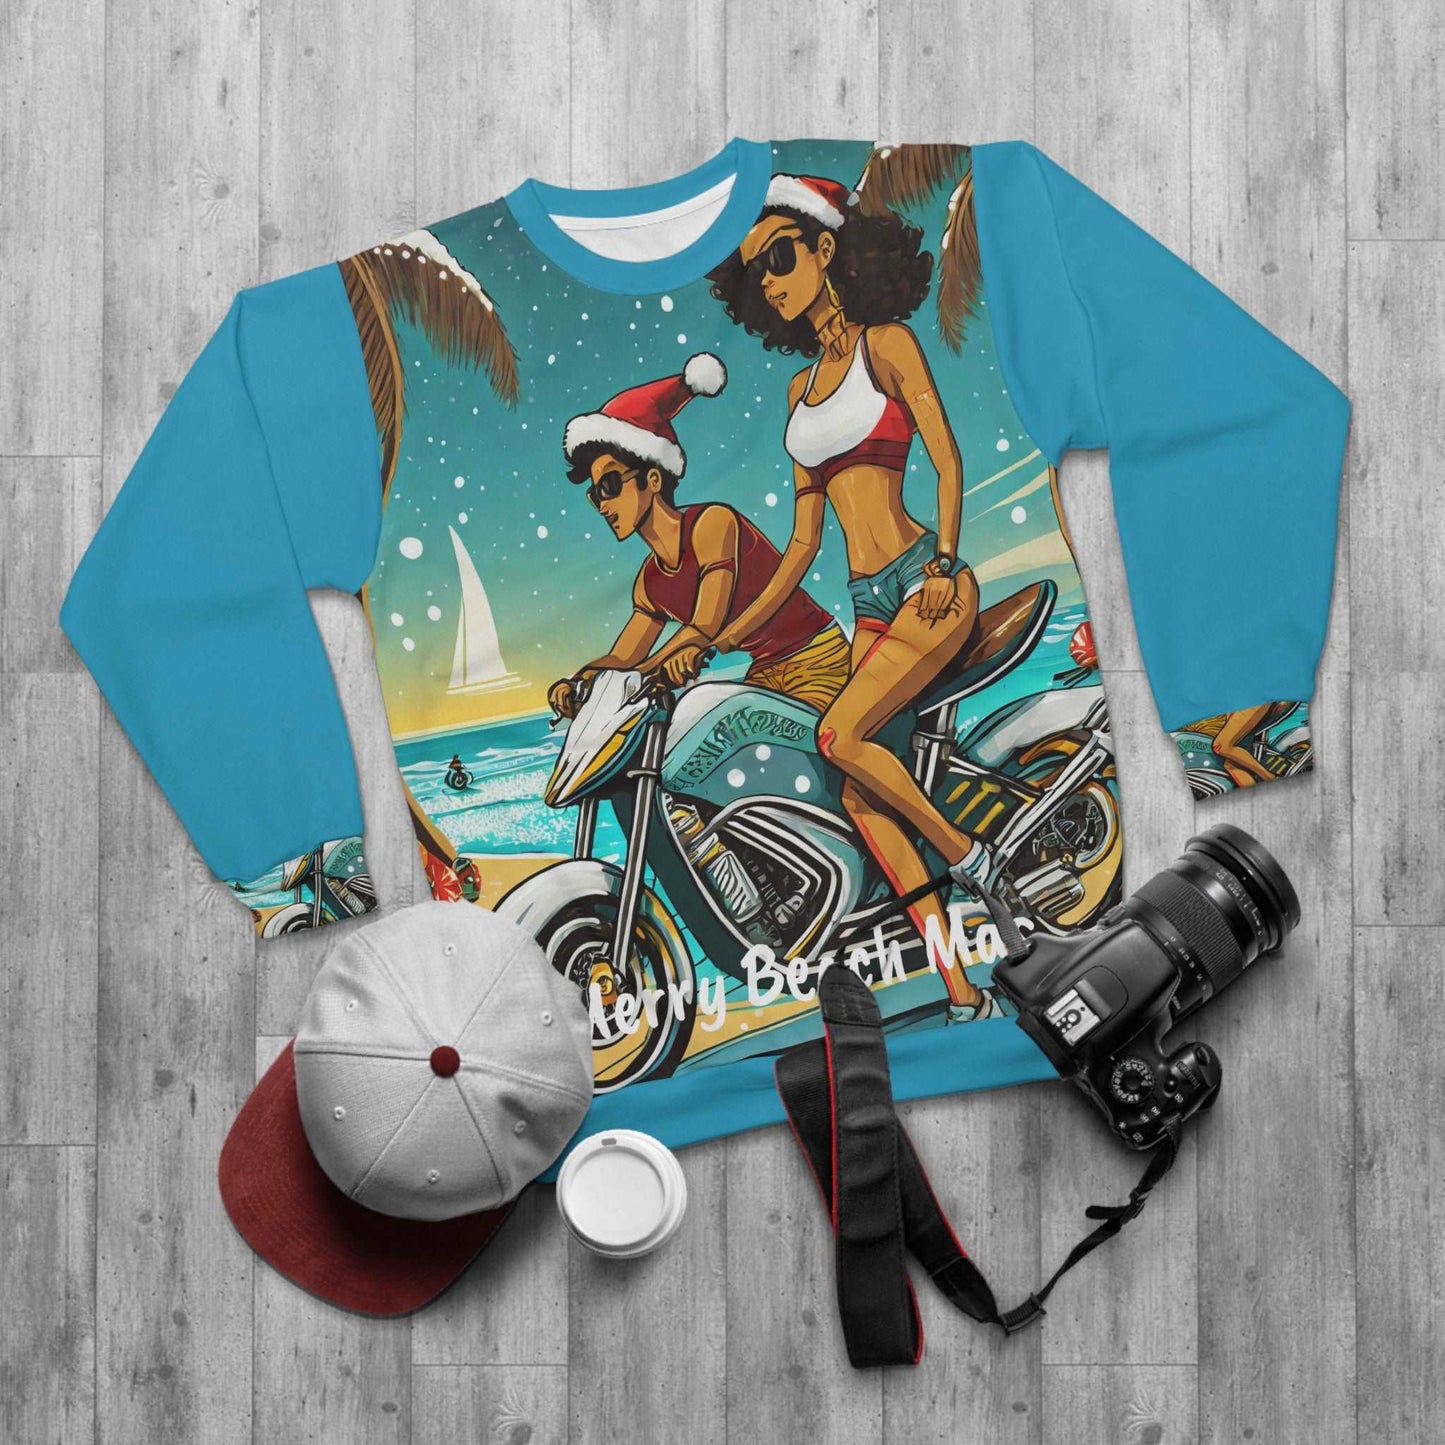 Merry Beach Mas Ugly Beach Chistmas Motorcycle Sweater Sunshirt